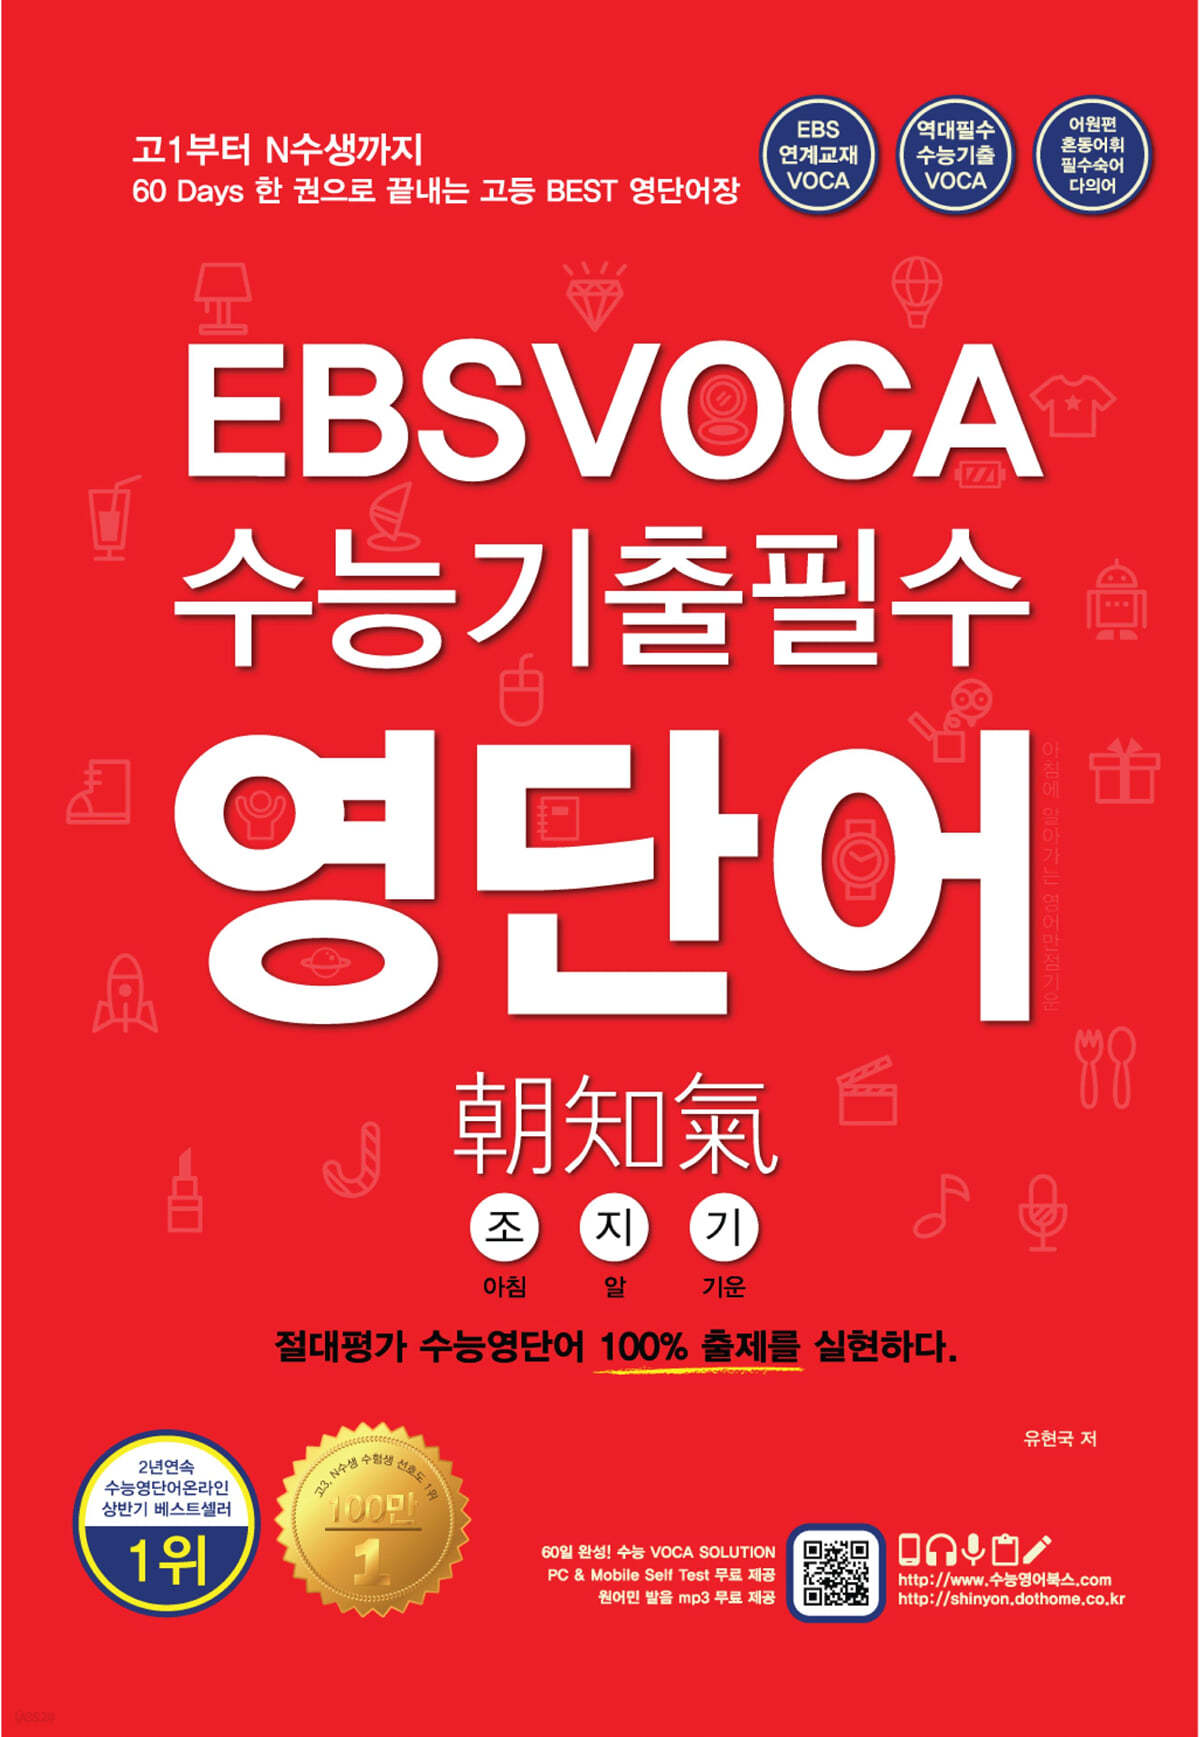 EBS VOCA 수능기출필수 영단어 조지기(朝知氣) 